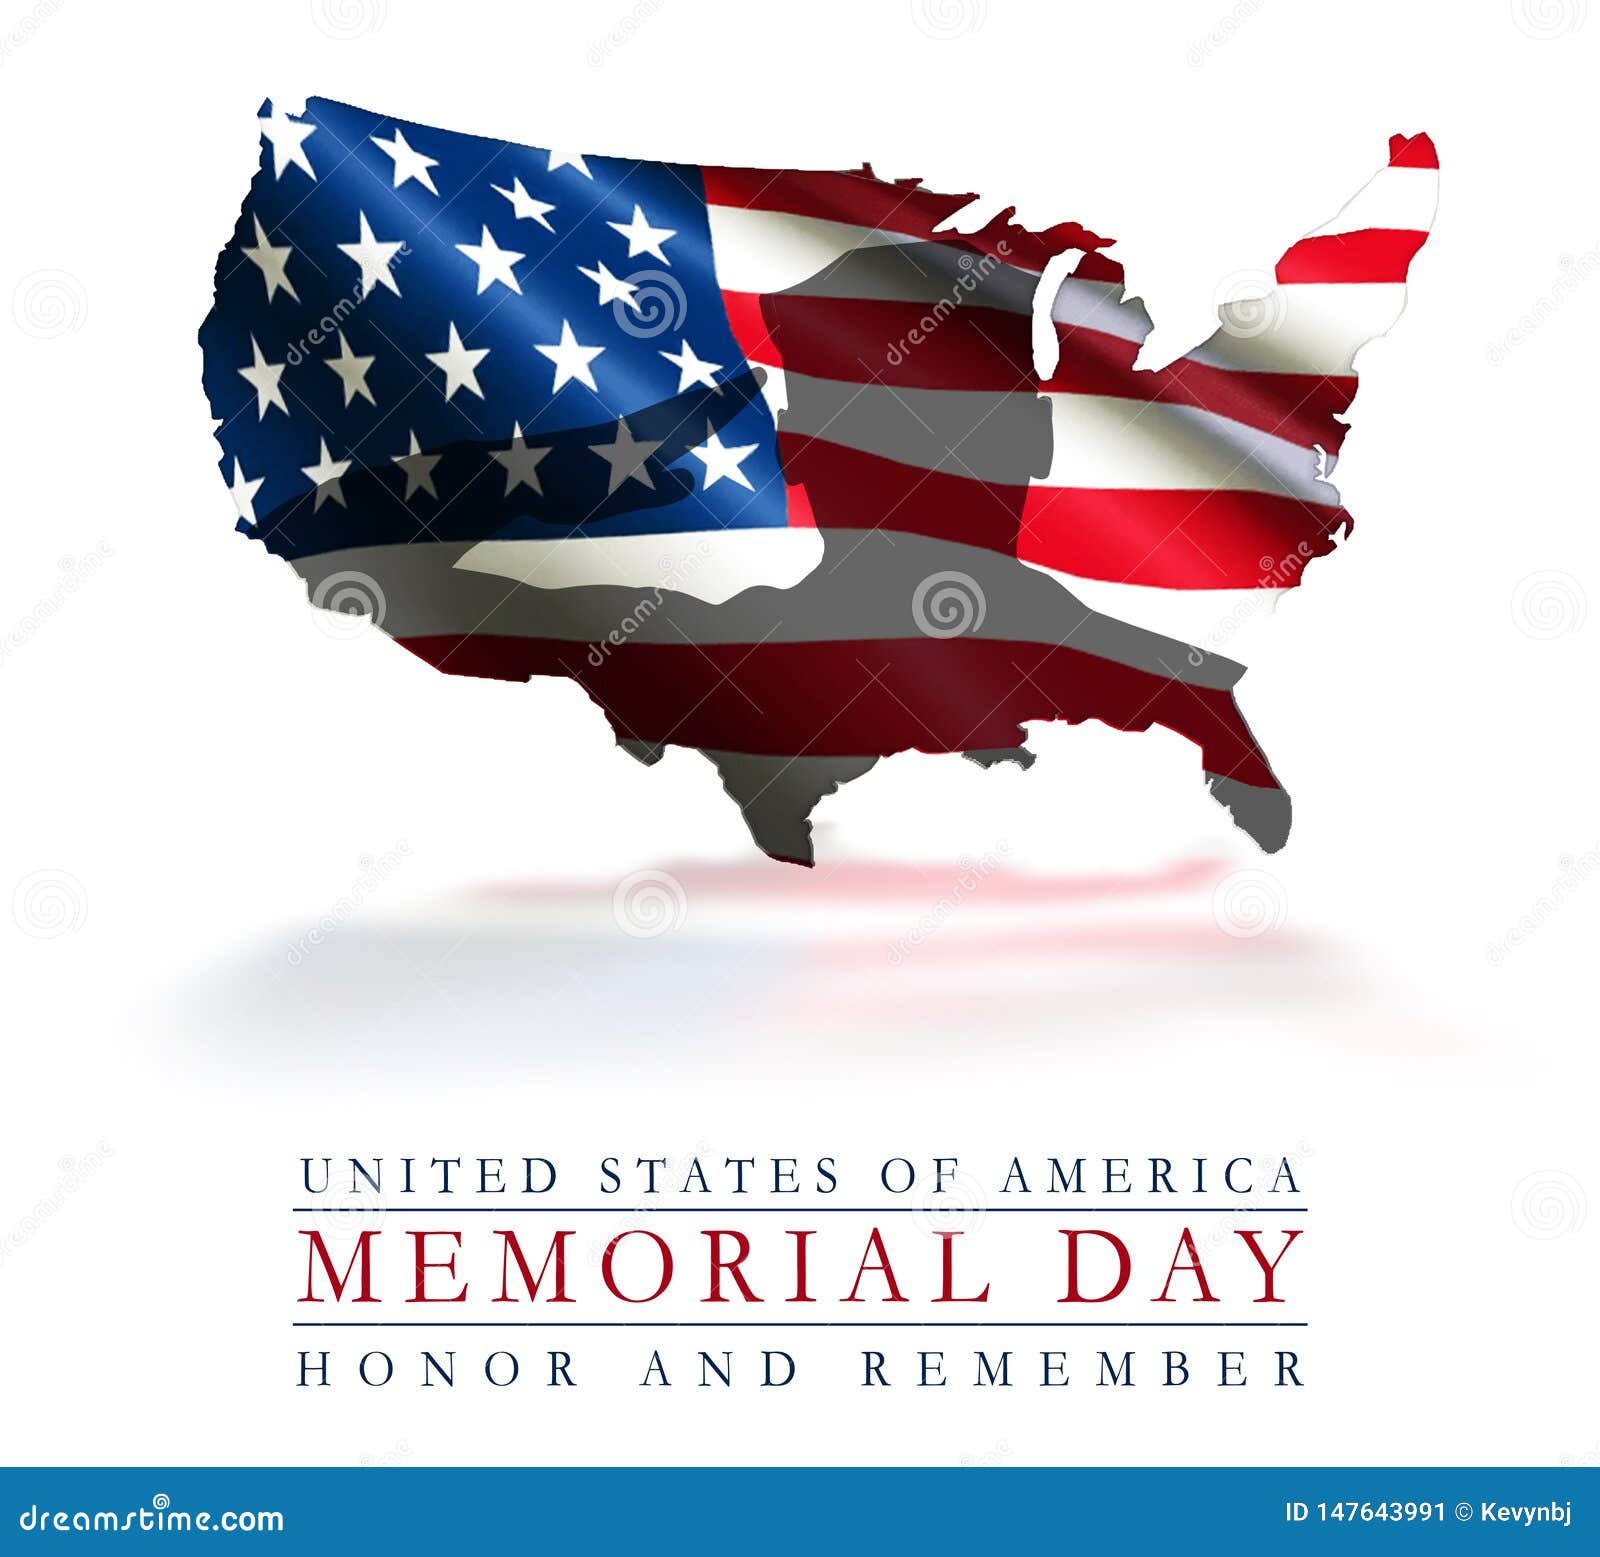 memorial day american art flag honor and remember